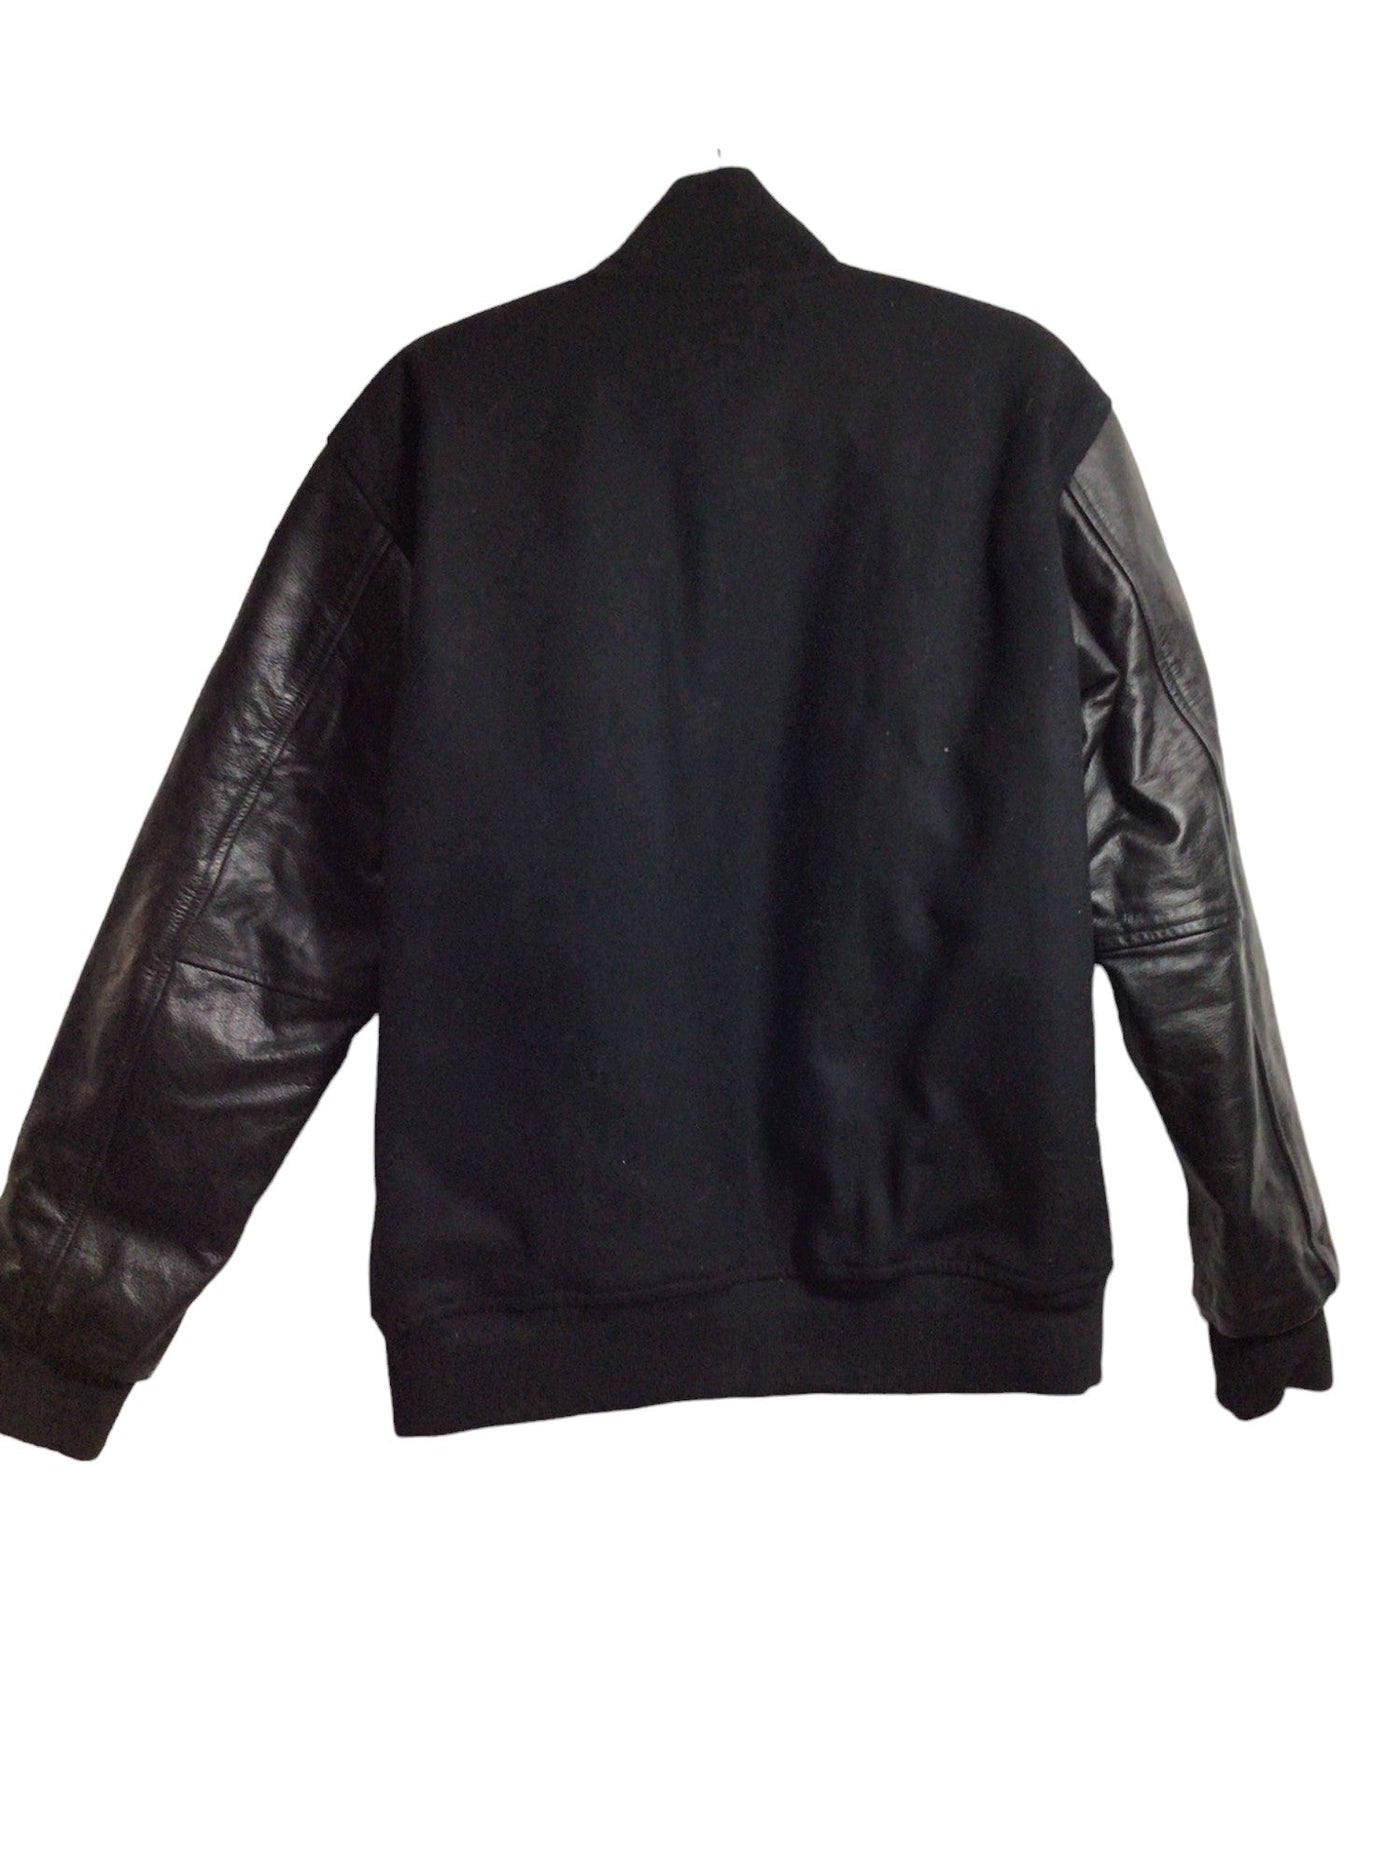 UNBRANDED Women Coats Regular fit in Black - Size M | 13.49 $ KOOP